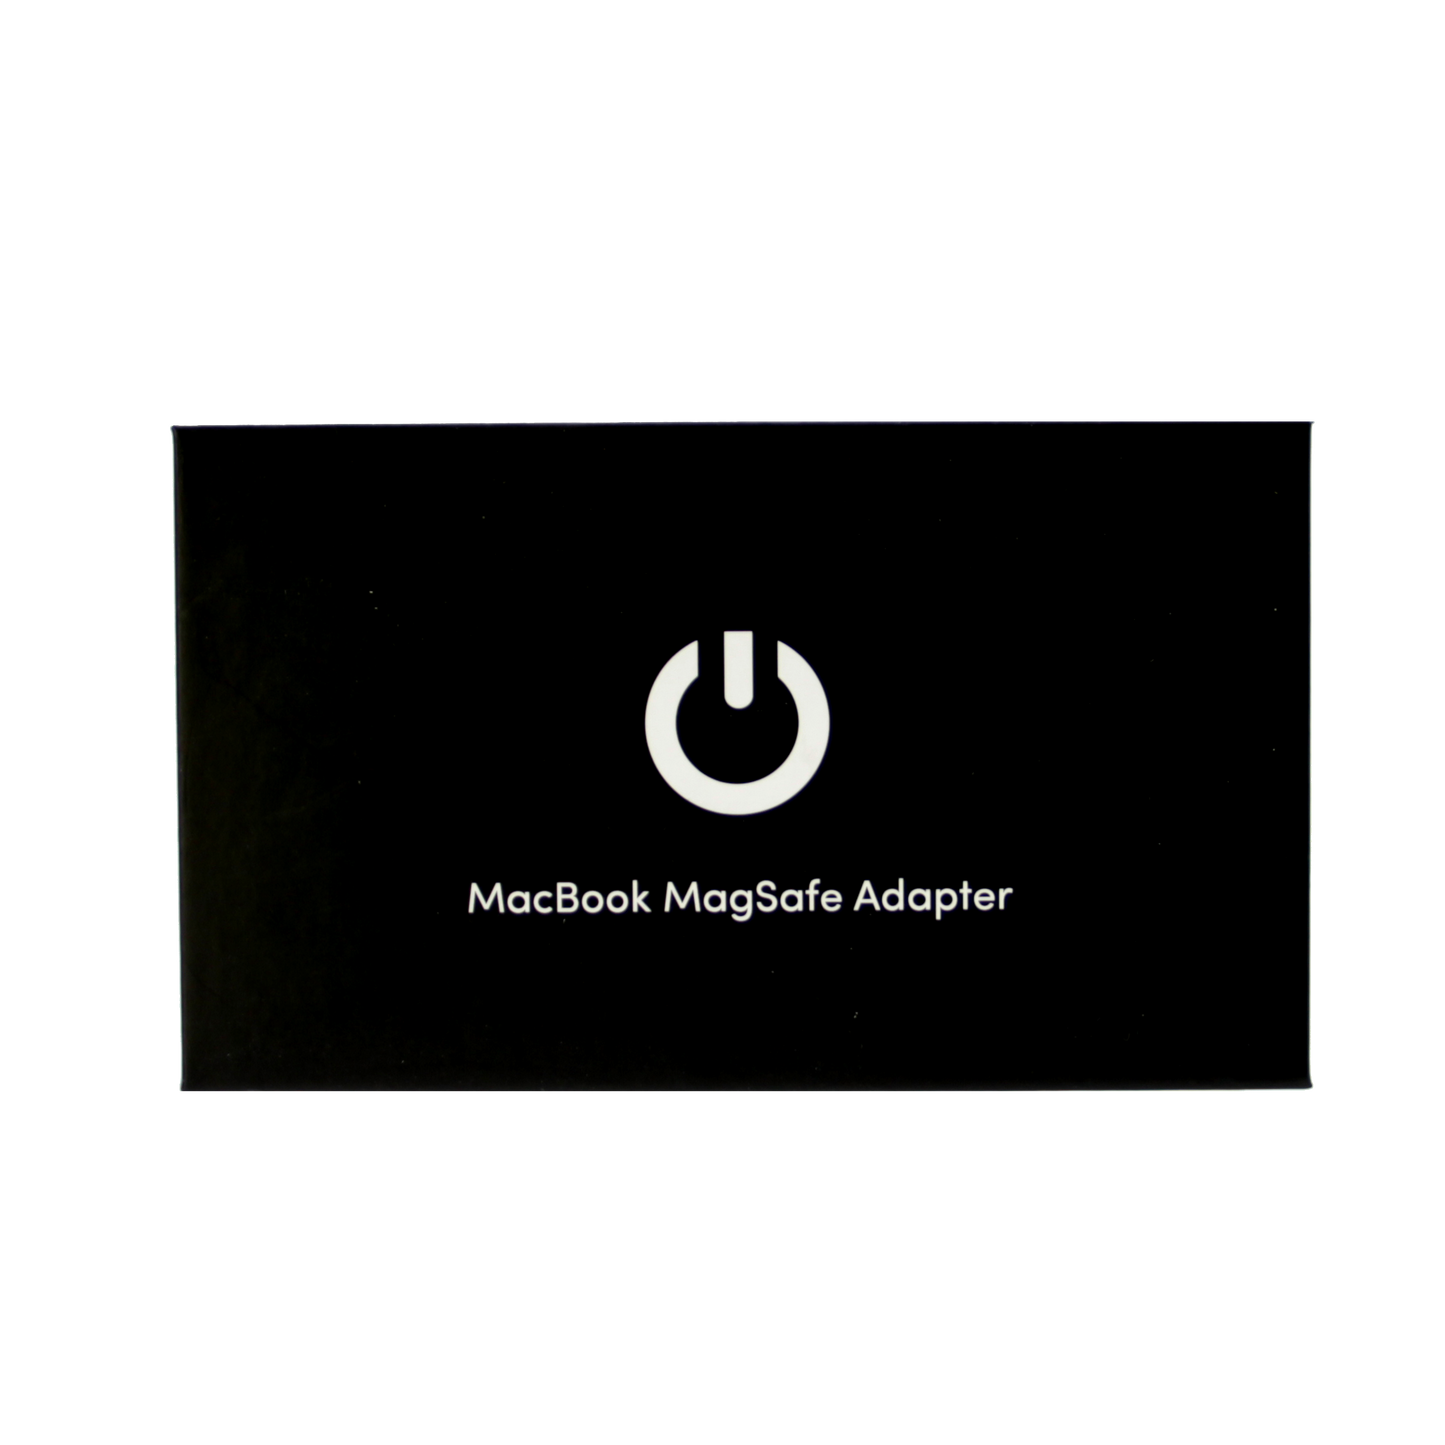 Refurbished Leapp Magsafe2 AC Adapter 85W - test-product-media-liquid1